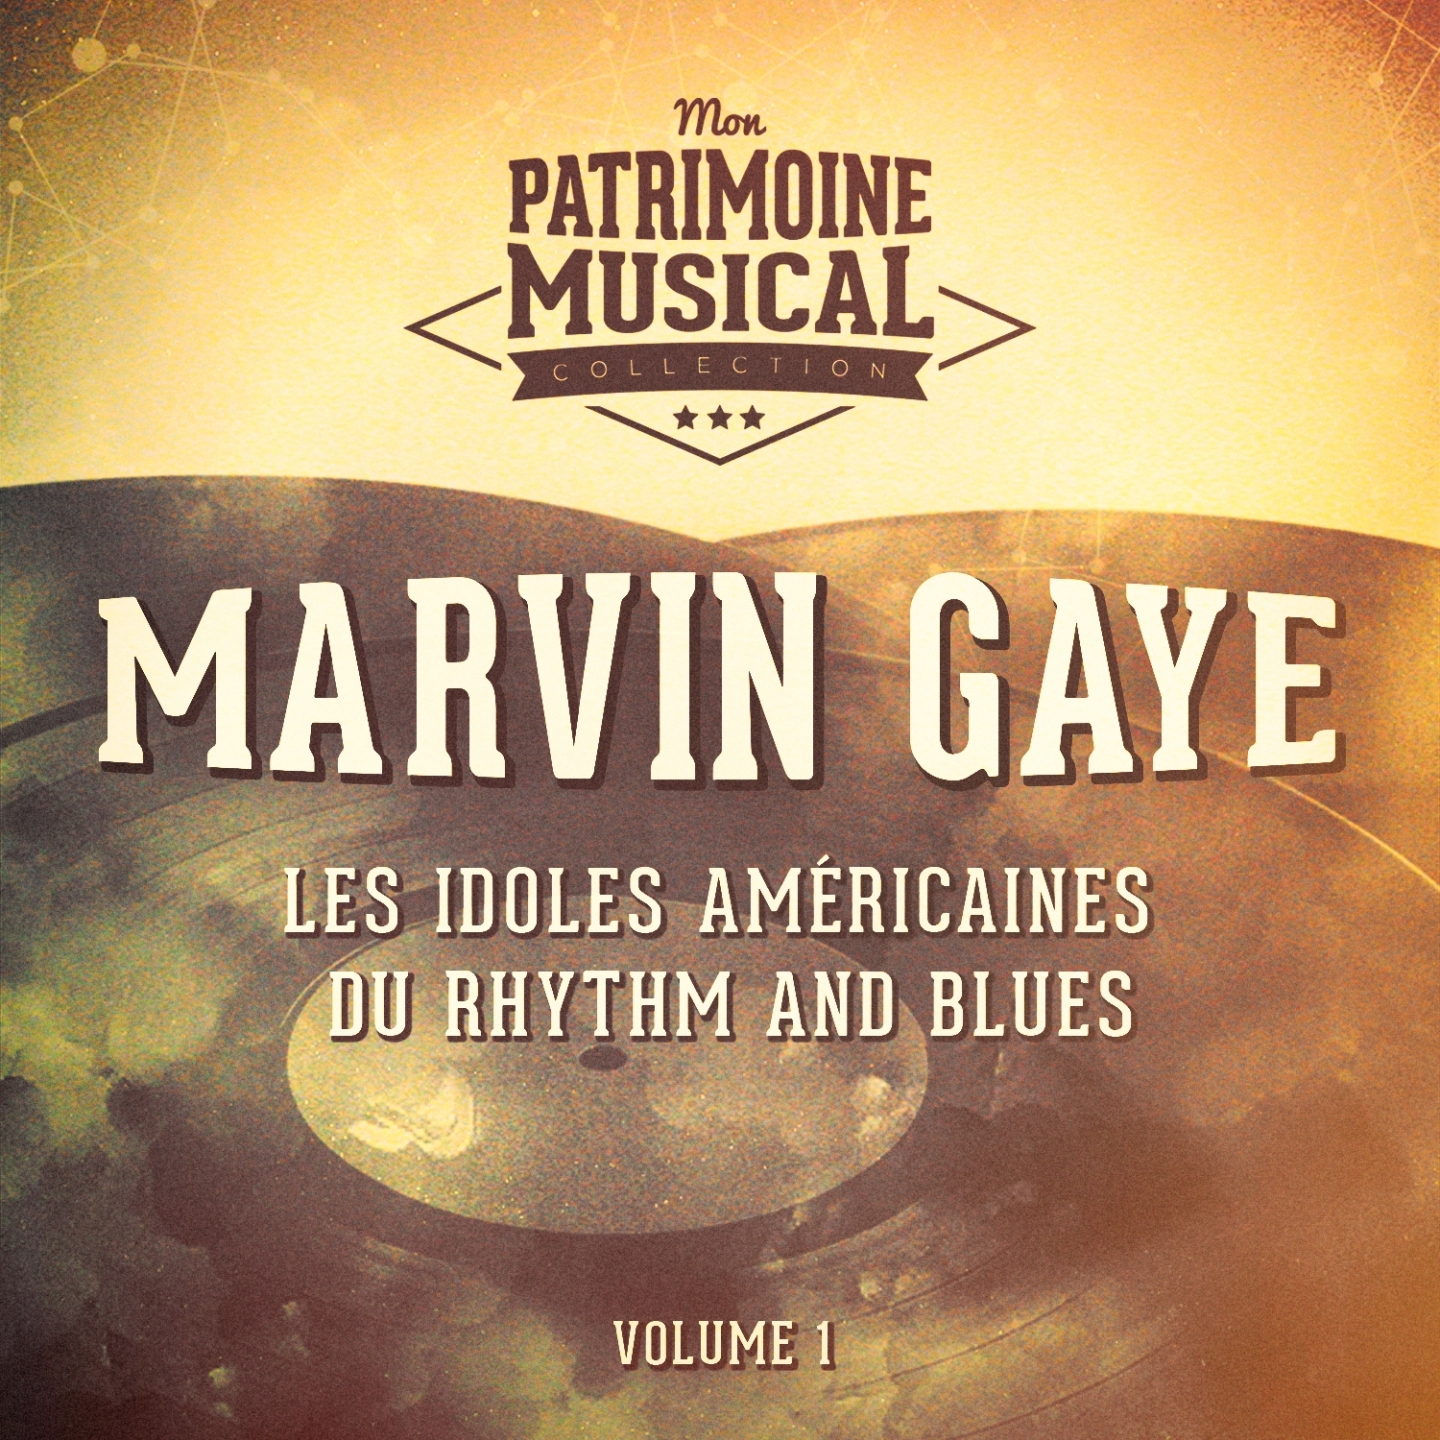 Les Idoles Ame ricaines Du Rhythm and Blues: Marvin Gaye, Vol. 1